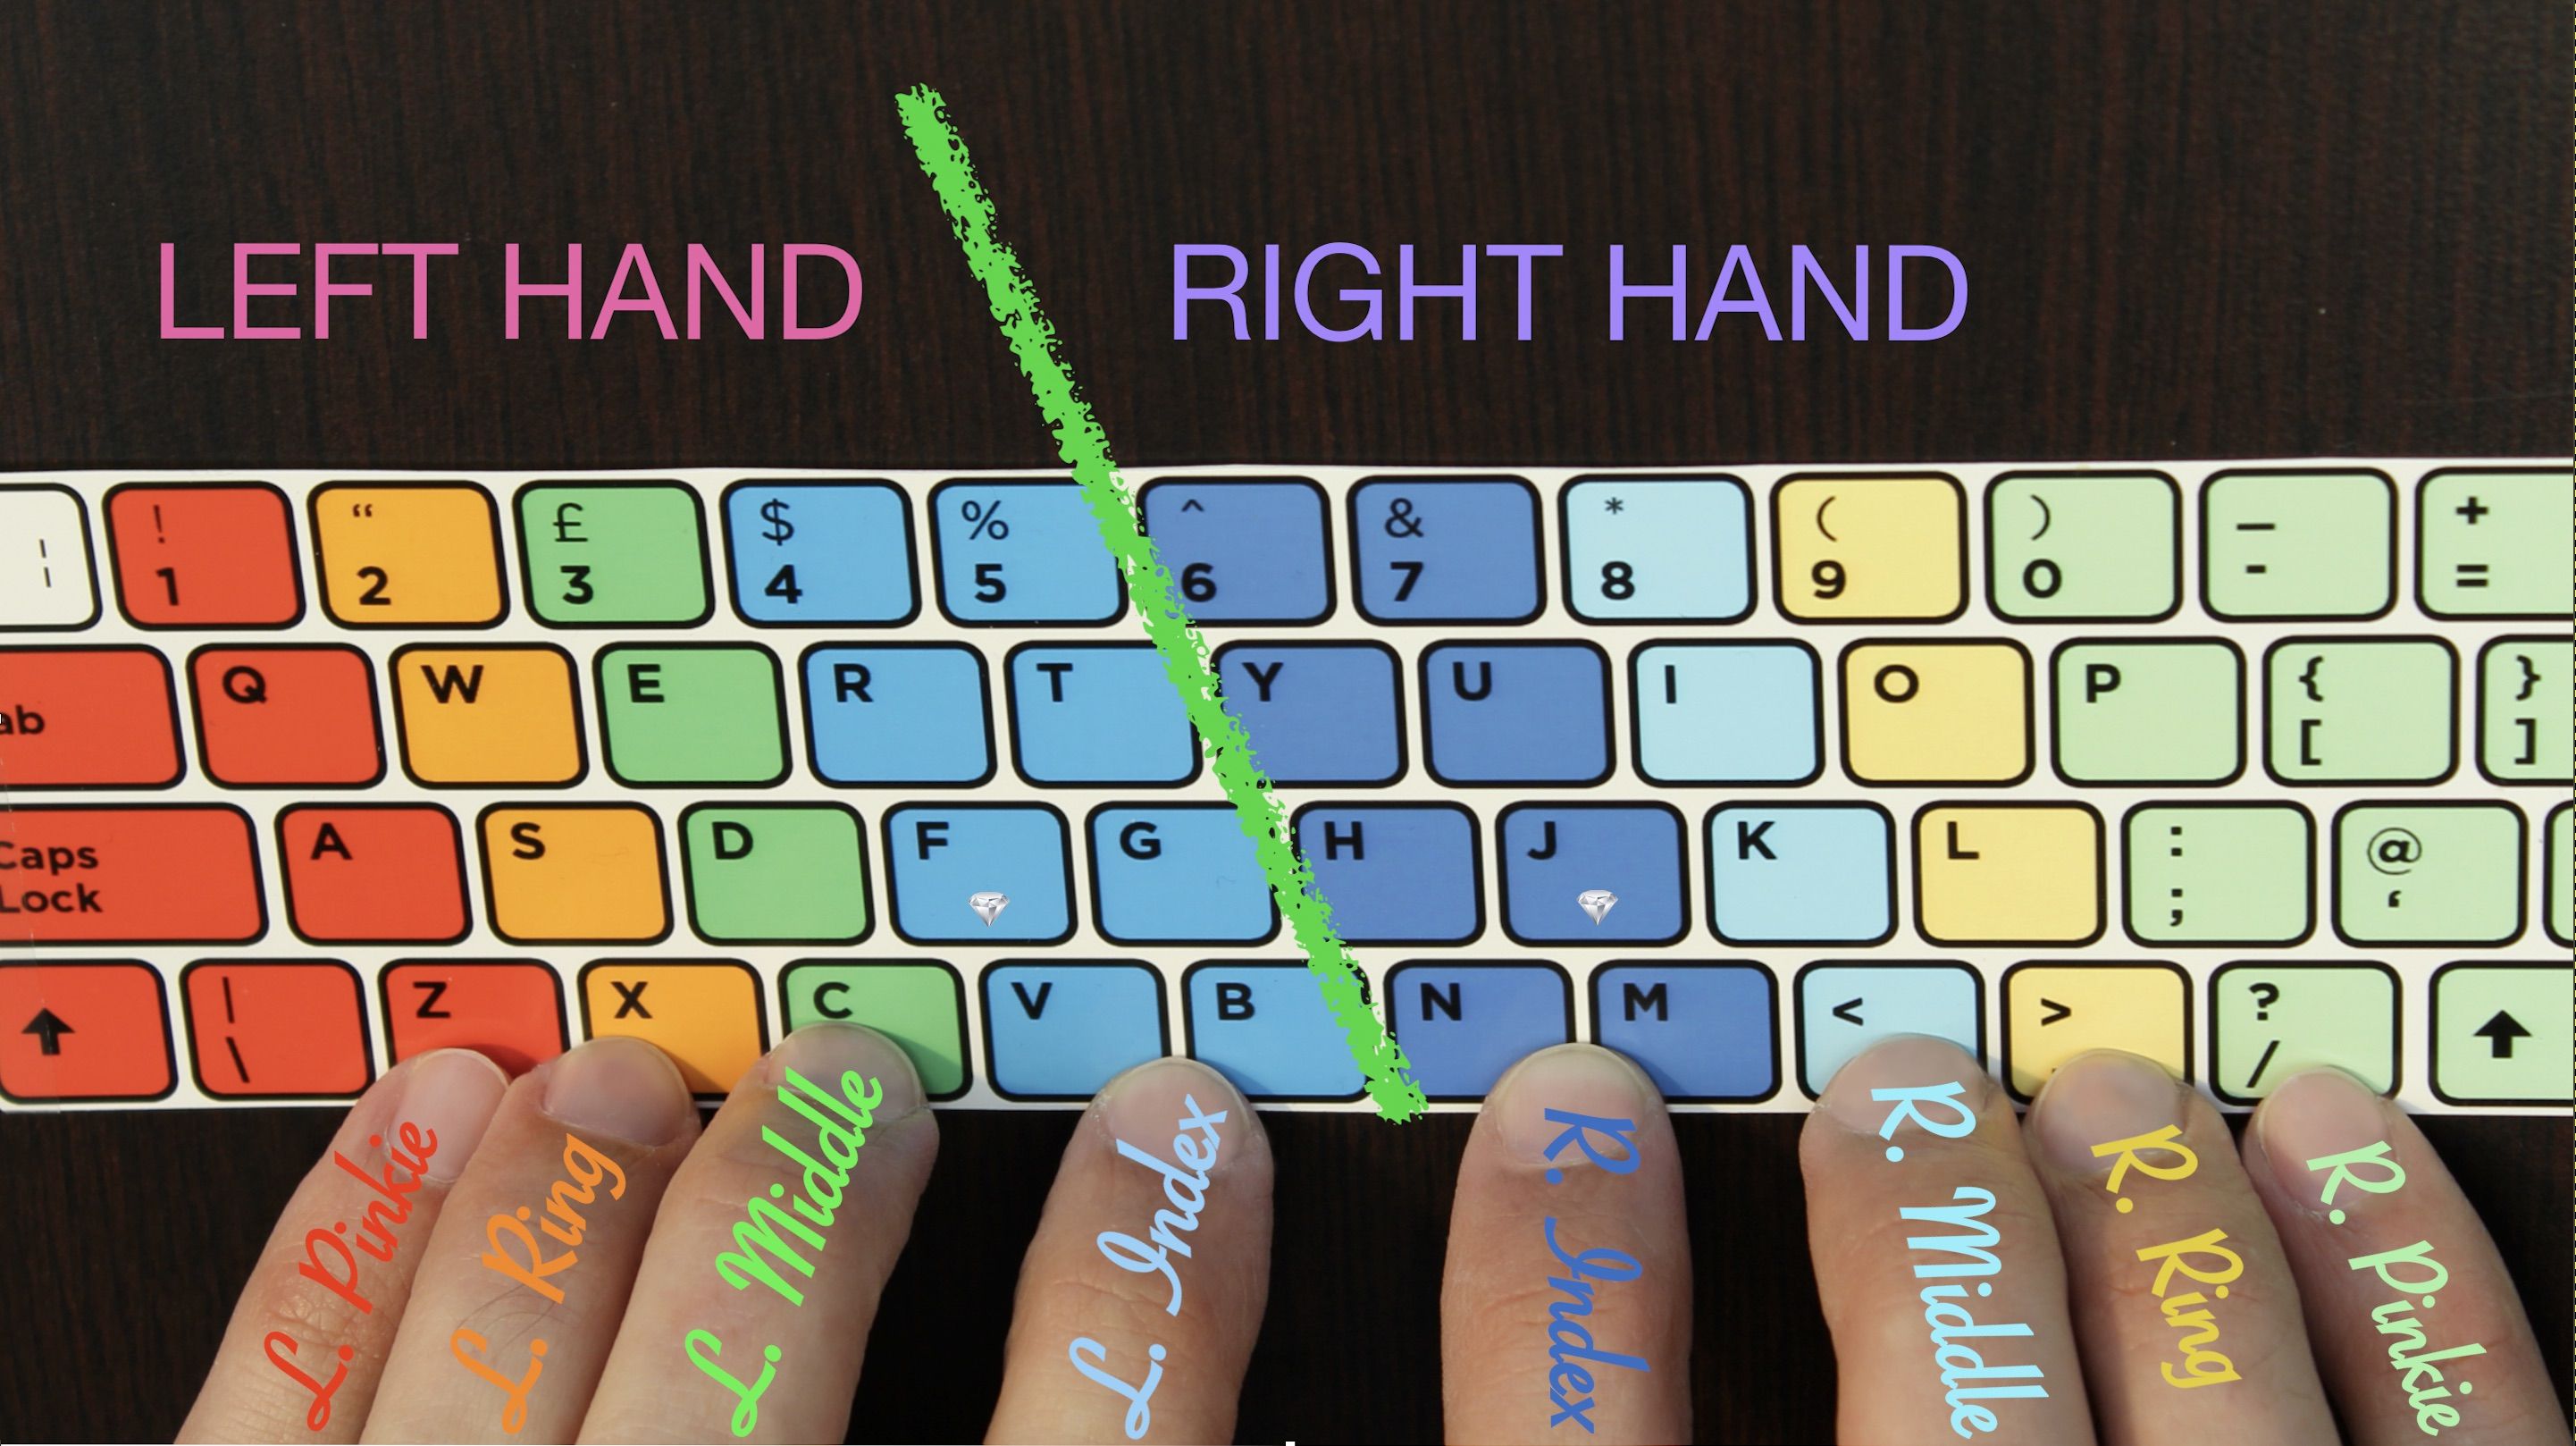 Пальцевый метод печати. Слепой десятипальцевый метод печати. Расположение пальцев на клавиатуре. Схема клавиатуры для слепой печати. Быстрая печать на клавиатуре.